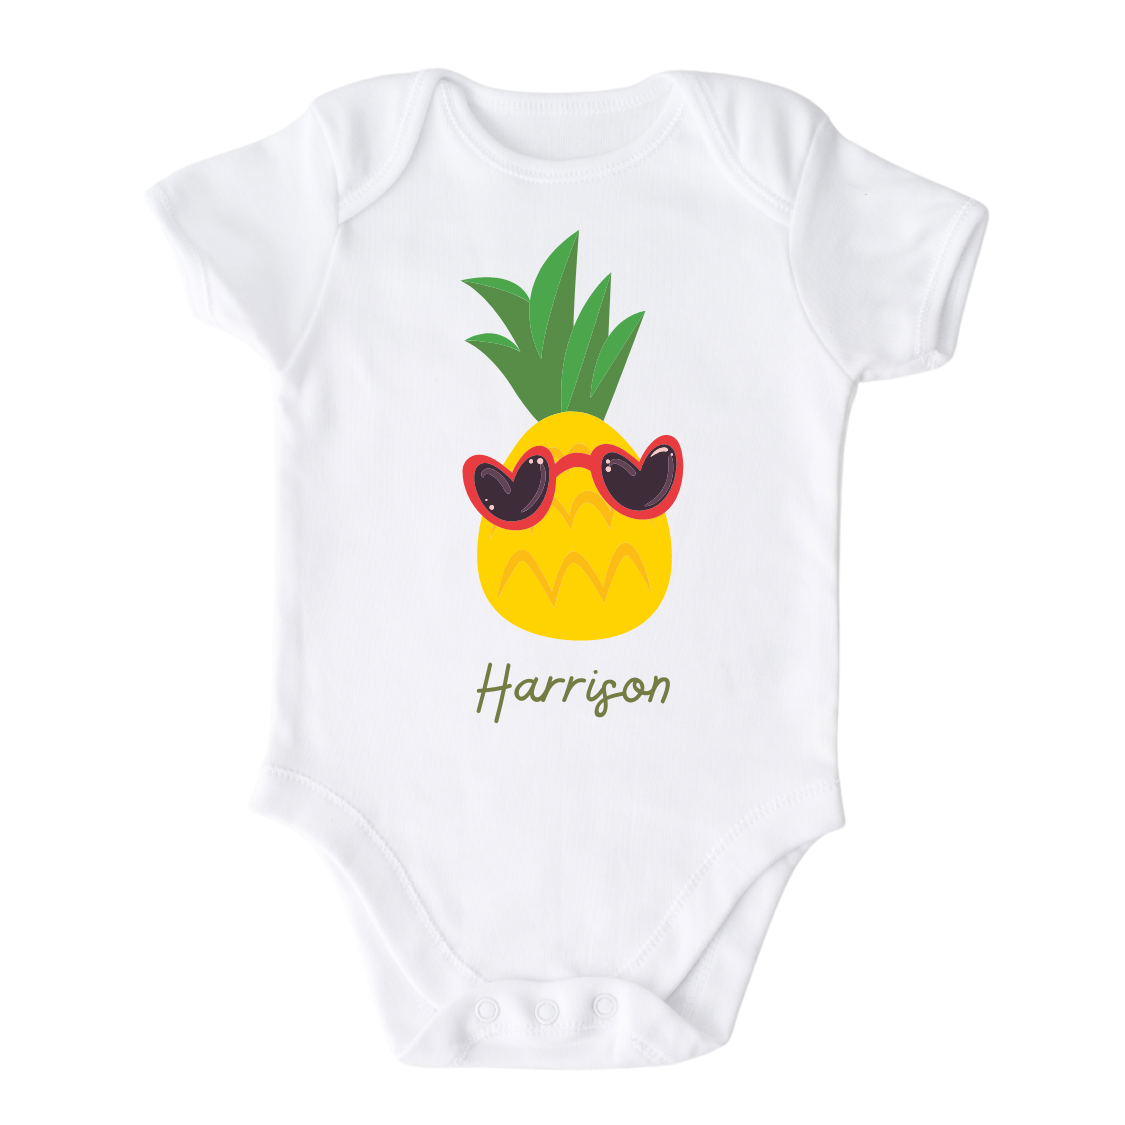 Cute Baby Onesie - Custom Baby gift - Pineapple Baby Clothes 